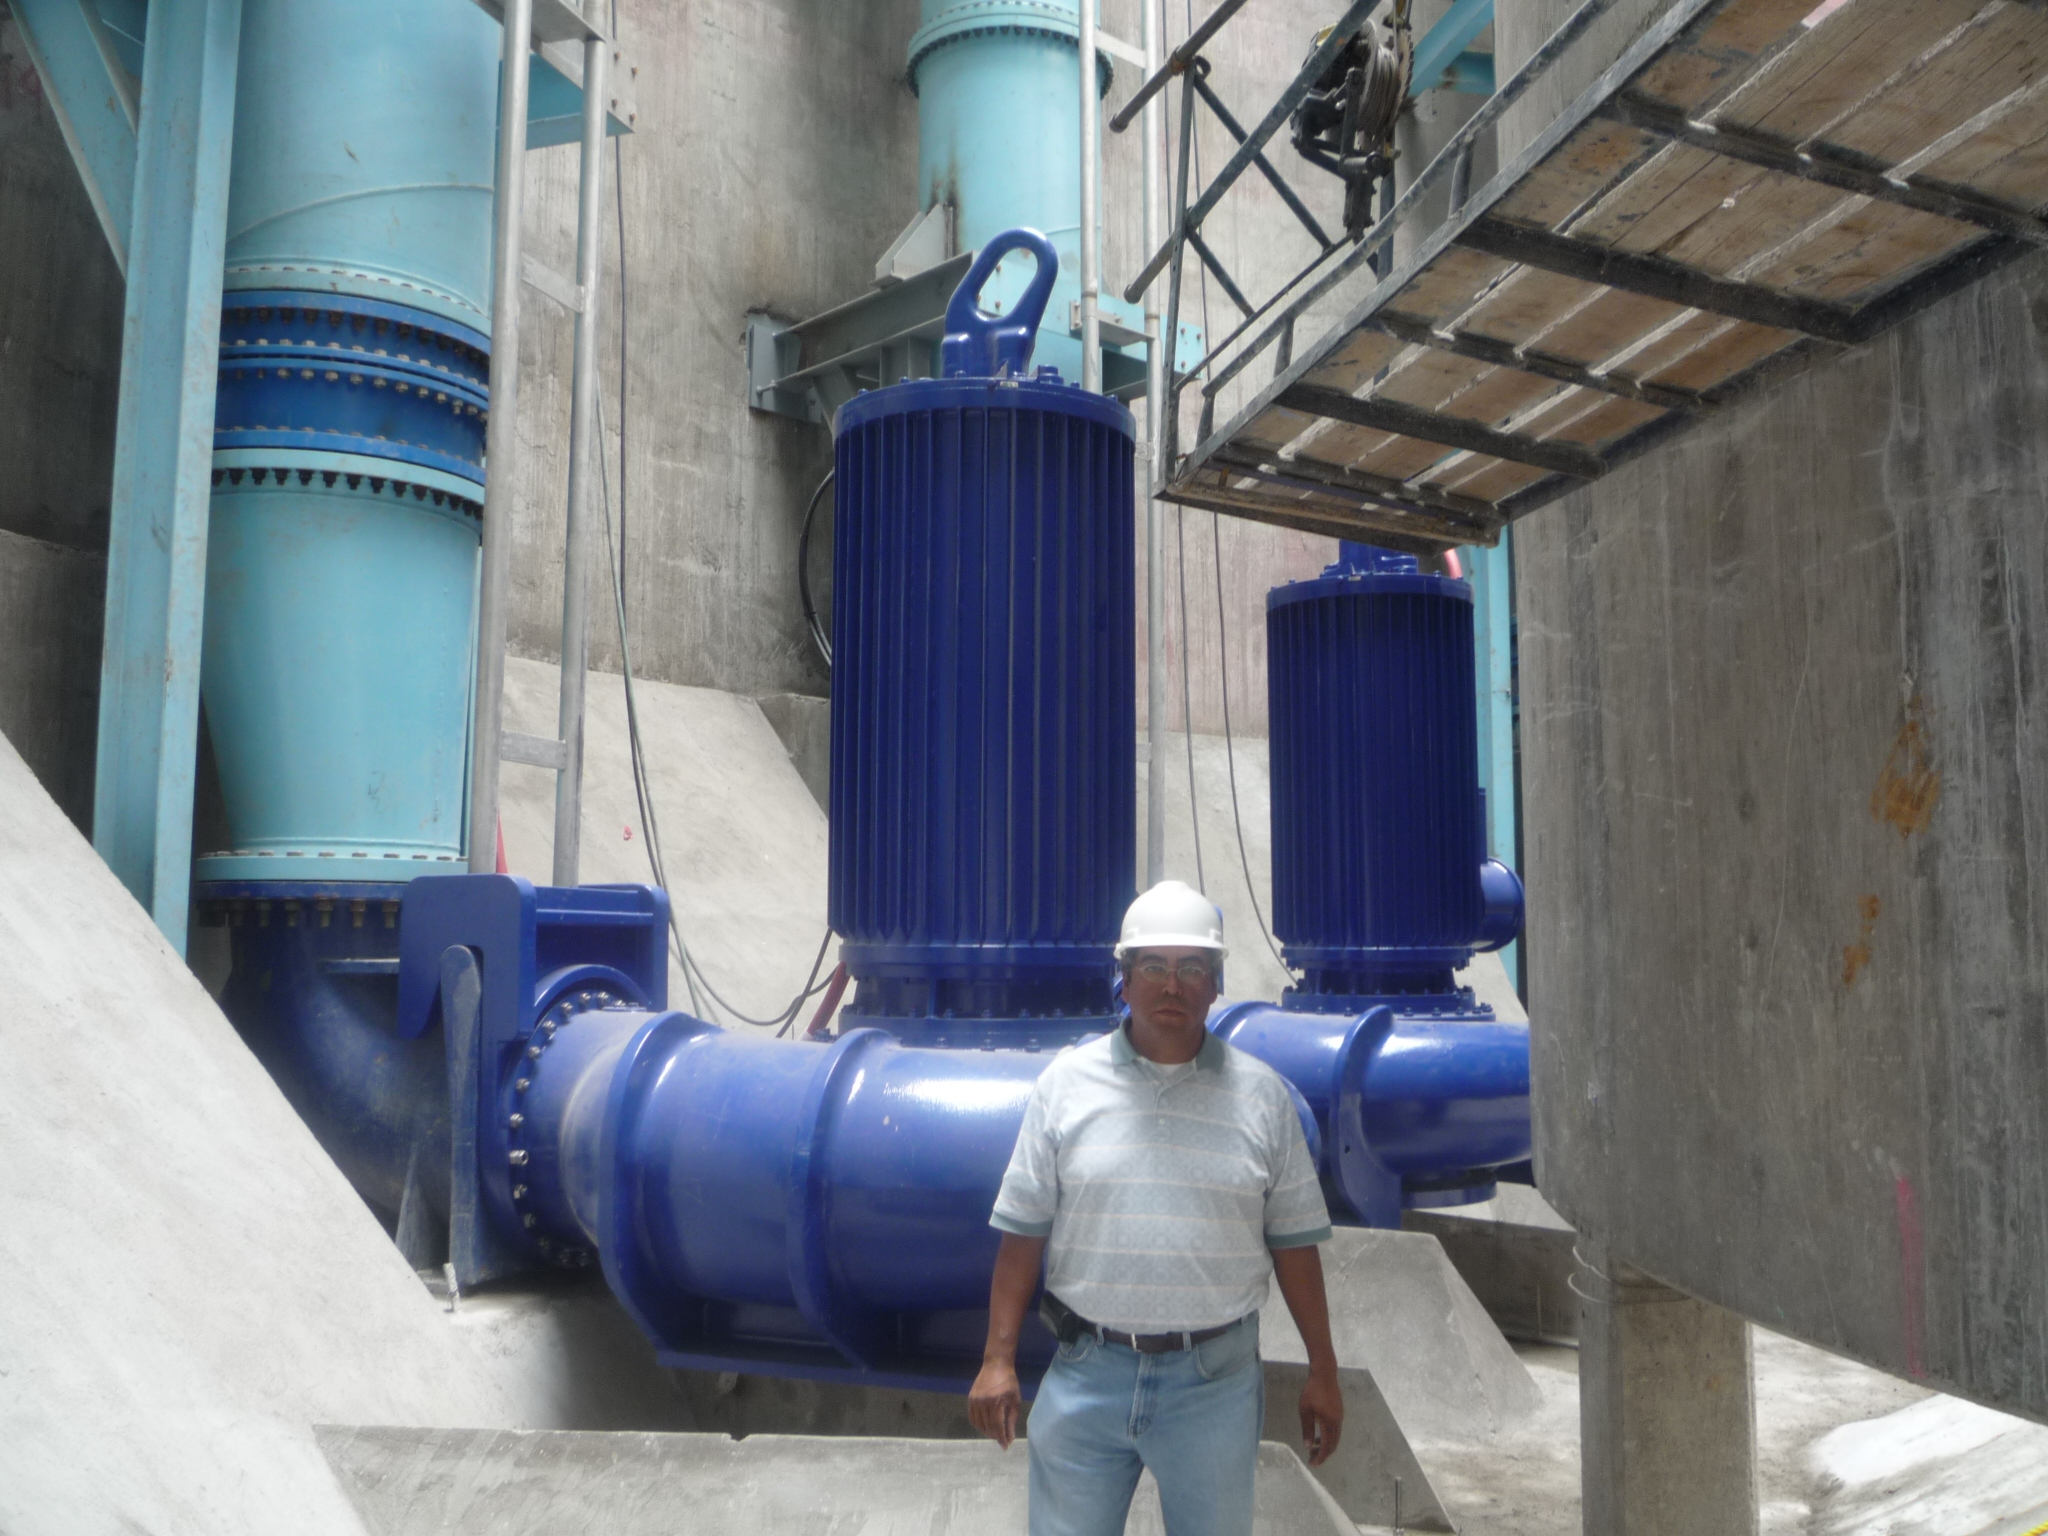 Figure 2. Pumps installed in La Caldera Pump Station